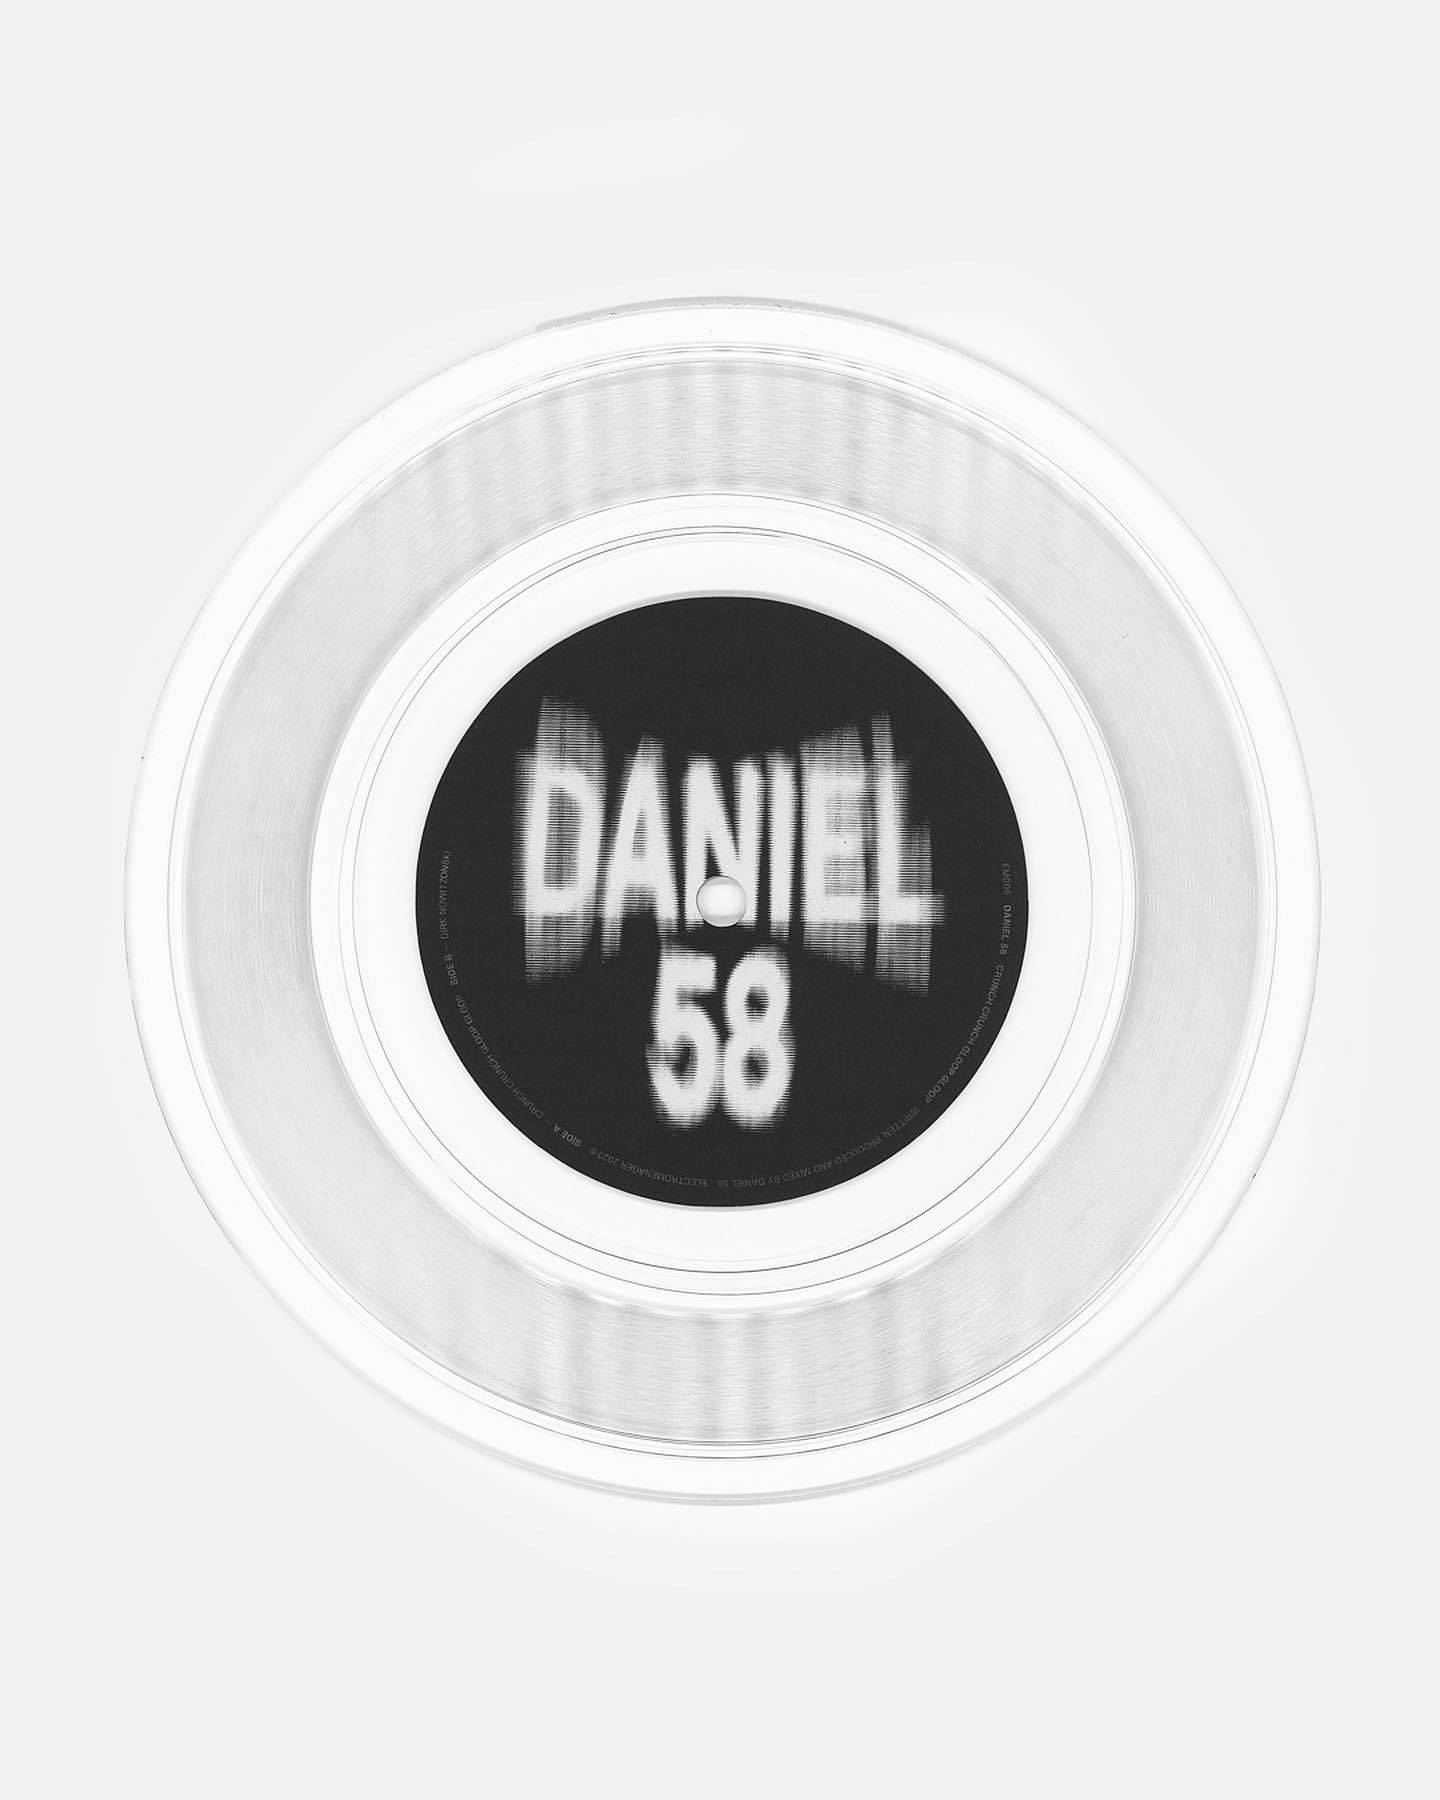 EM006 - Daniel 58 (Vinyl Electromngr)